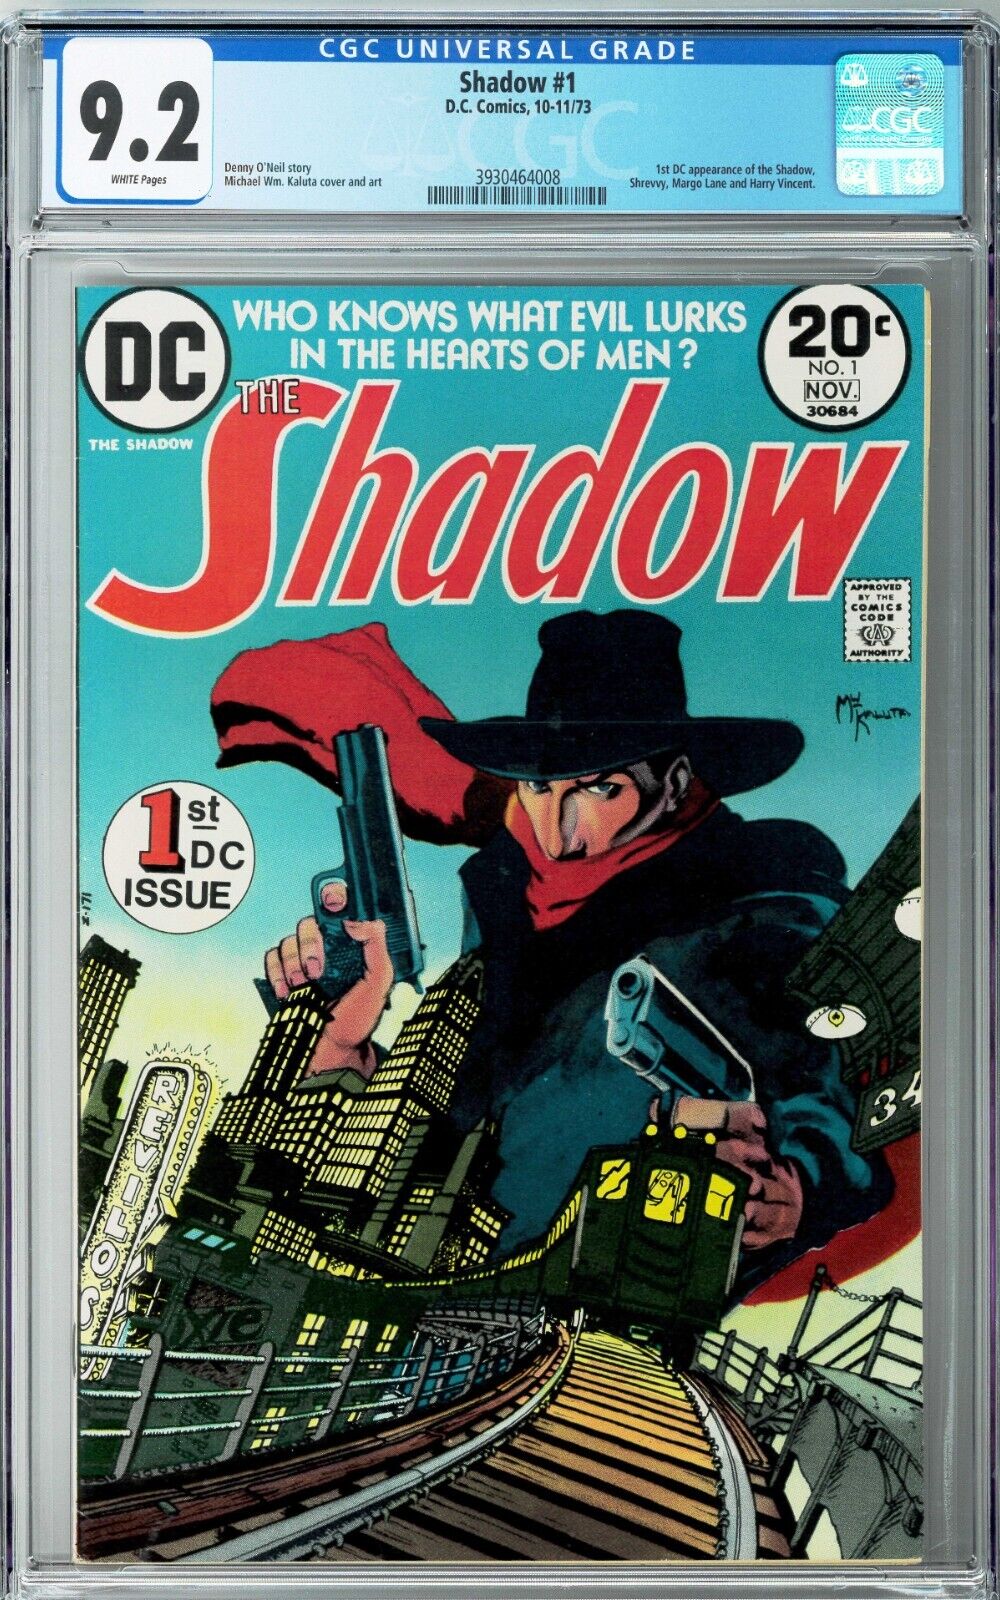 The Shadow #1 CGC 9.2 (Nov 1973, DC) O'Neil Story, Kaluta Cover, 1st DC Issue